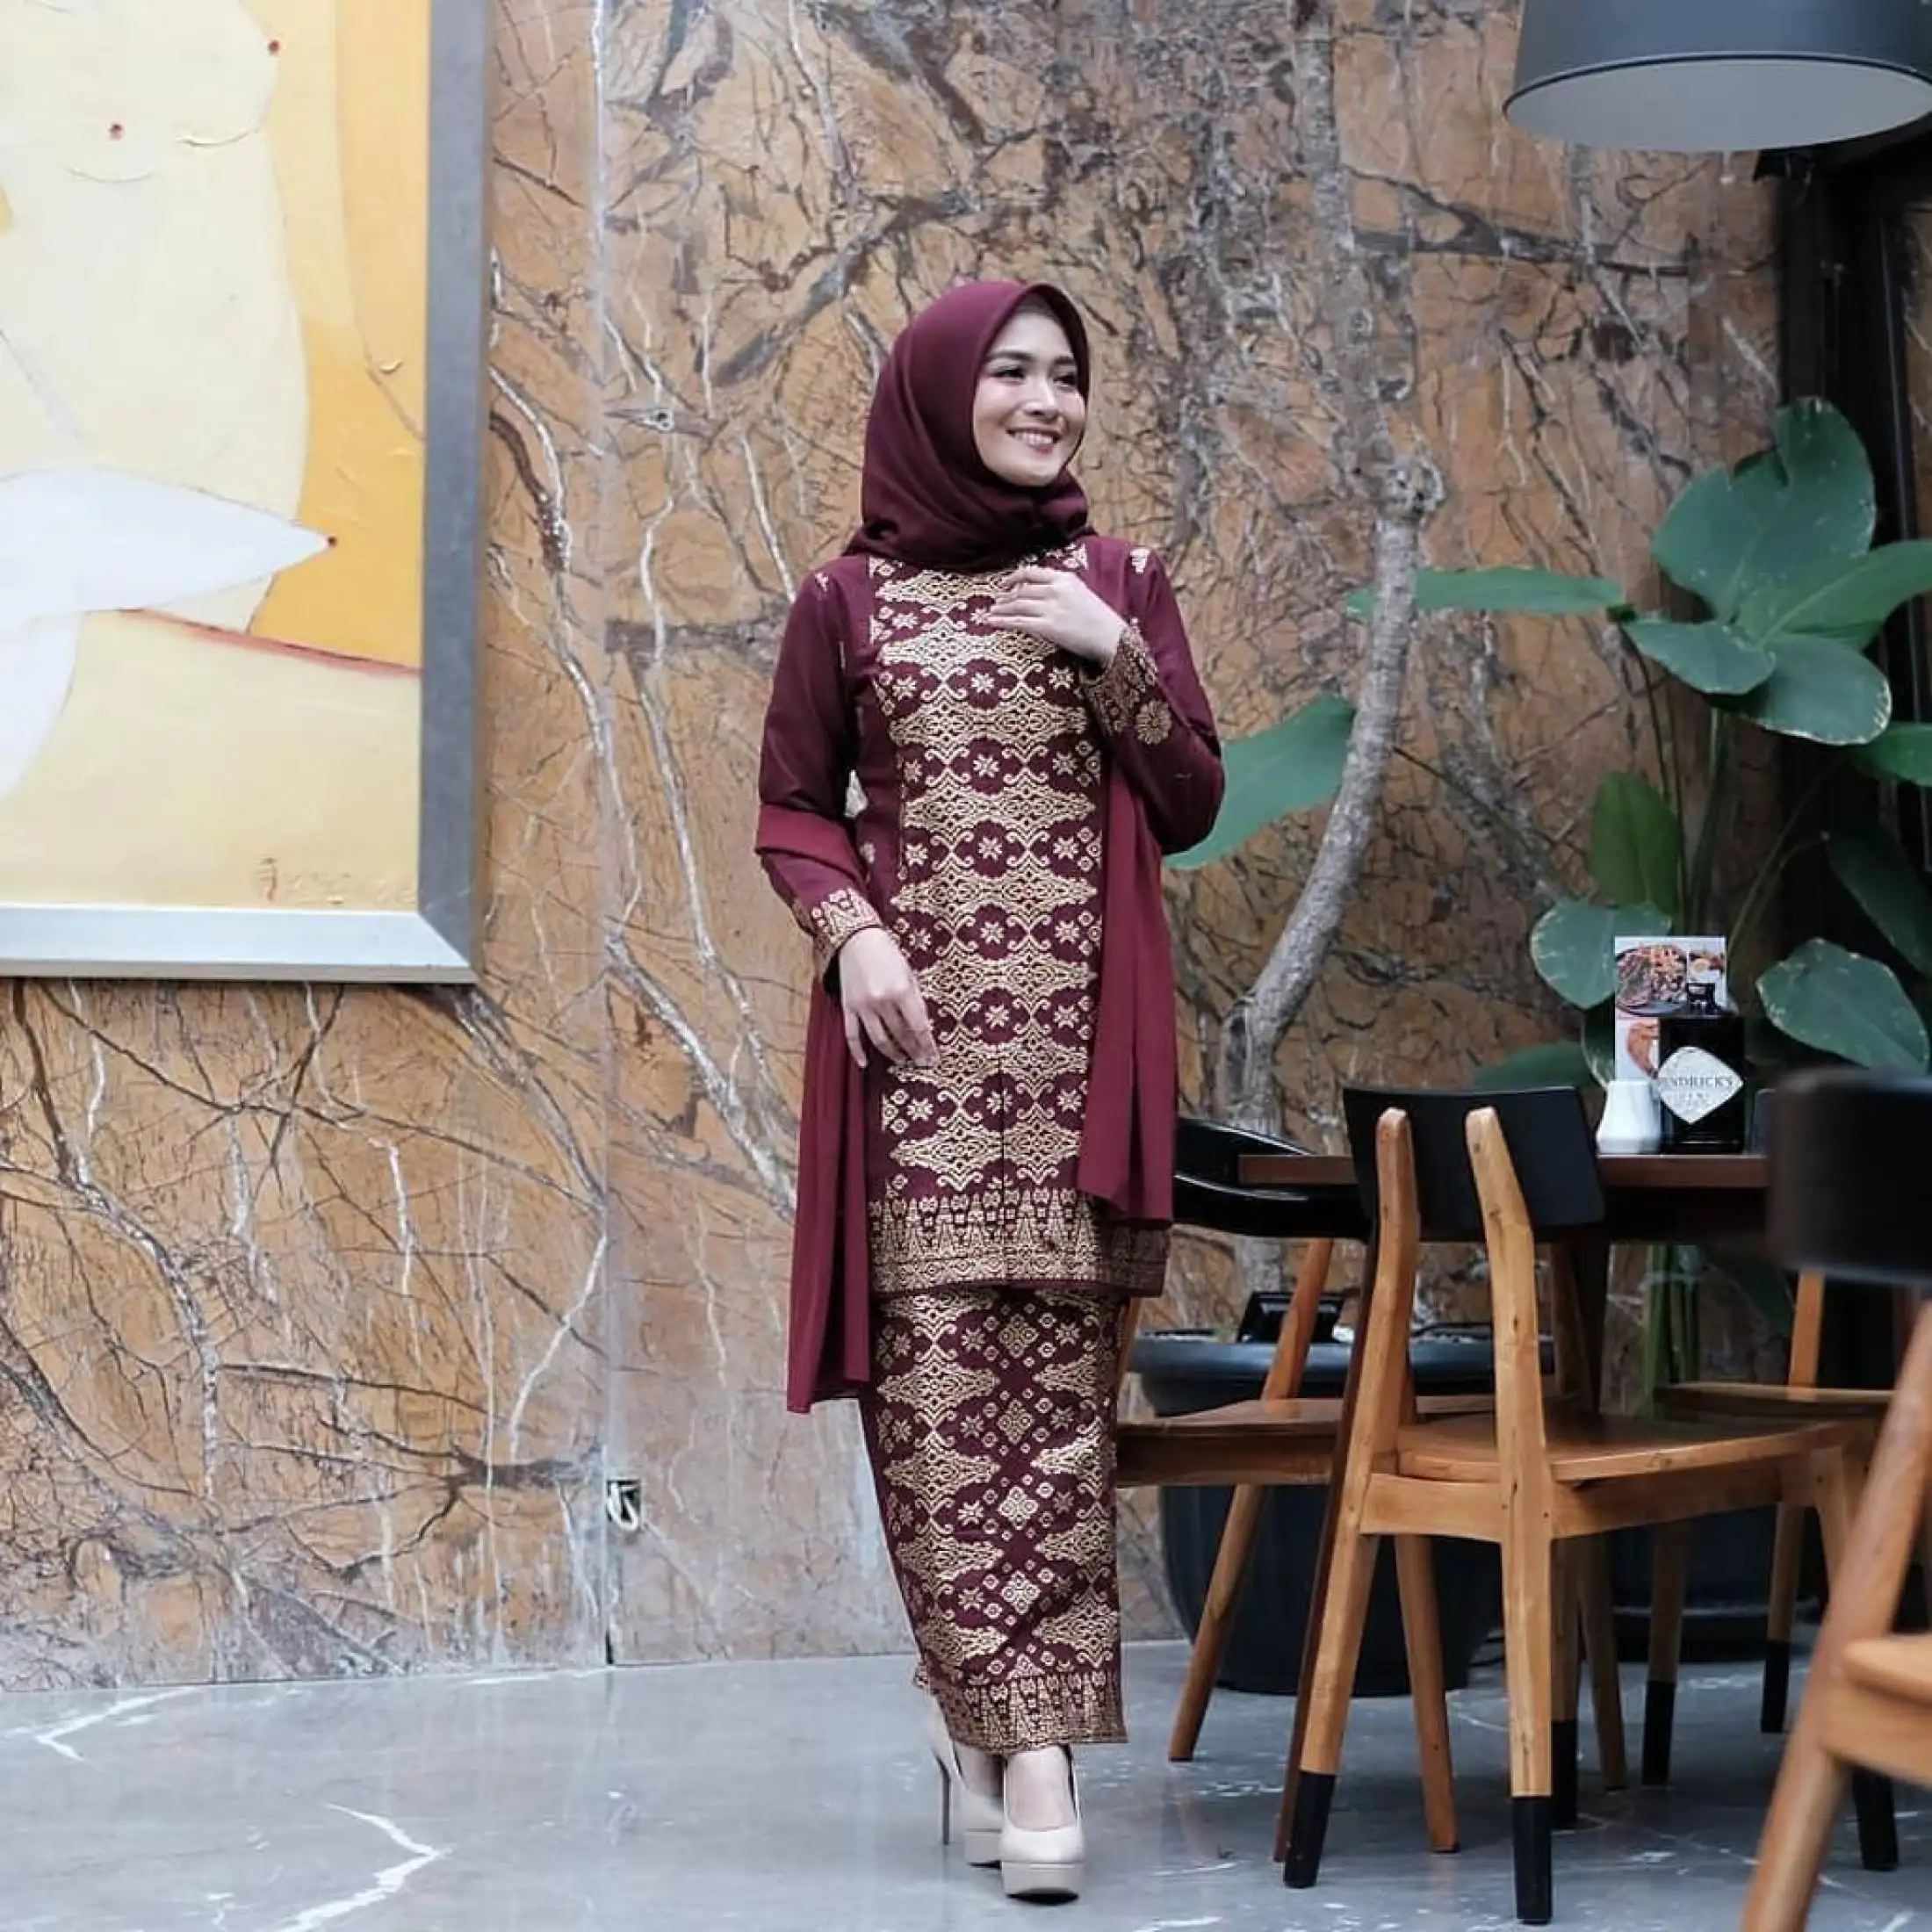 Baju Batik Couple Terbaru 2021 Baju Kondangan Couple Terbaru Batik Couple Tunangan Batik Moderen Keluarga Batik Couple Pasangan Baju Gamis Dress Batik Couple Tunangan Batik Sarimbit Baju Batik Kebaya Chandra Lazada Indonesia